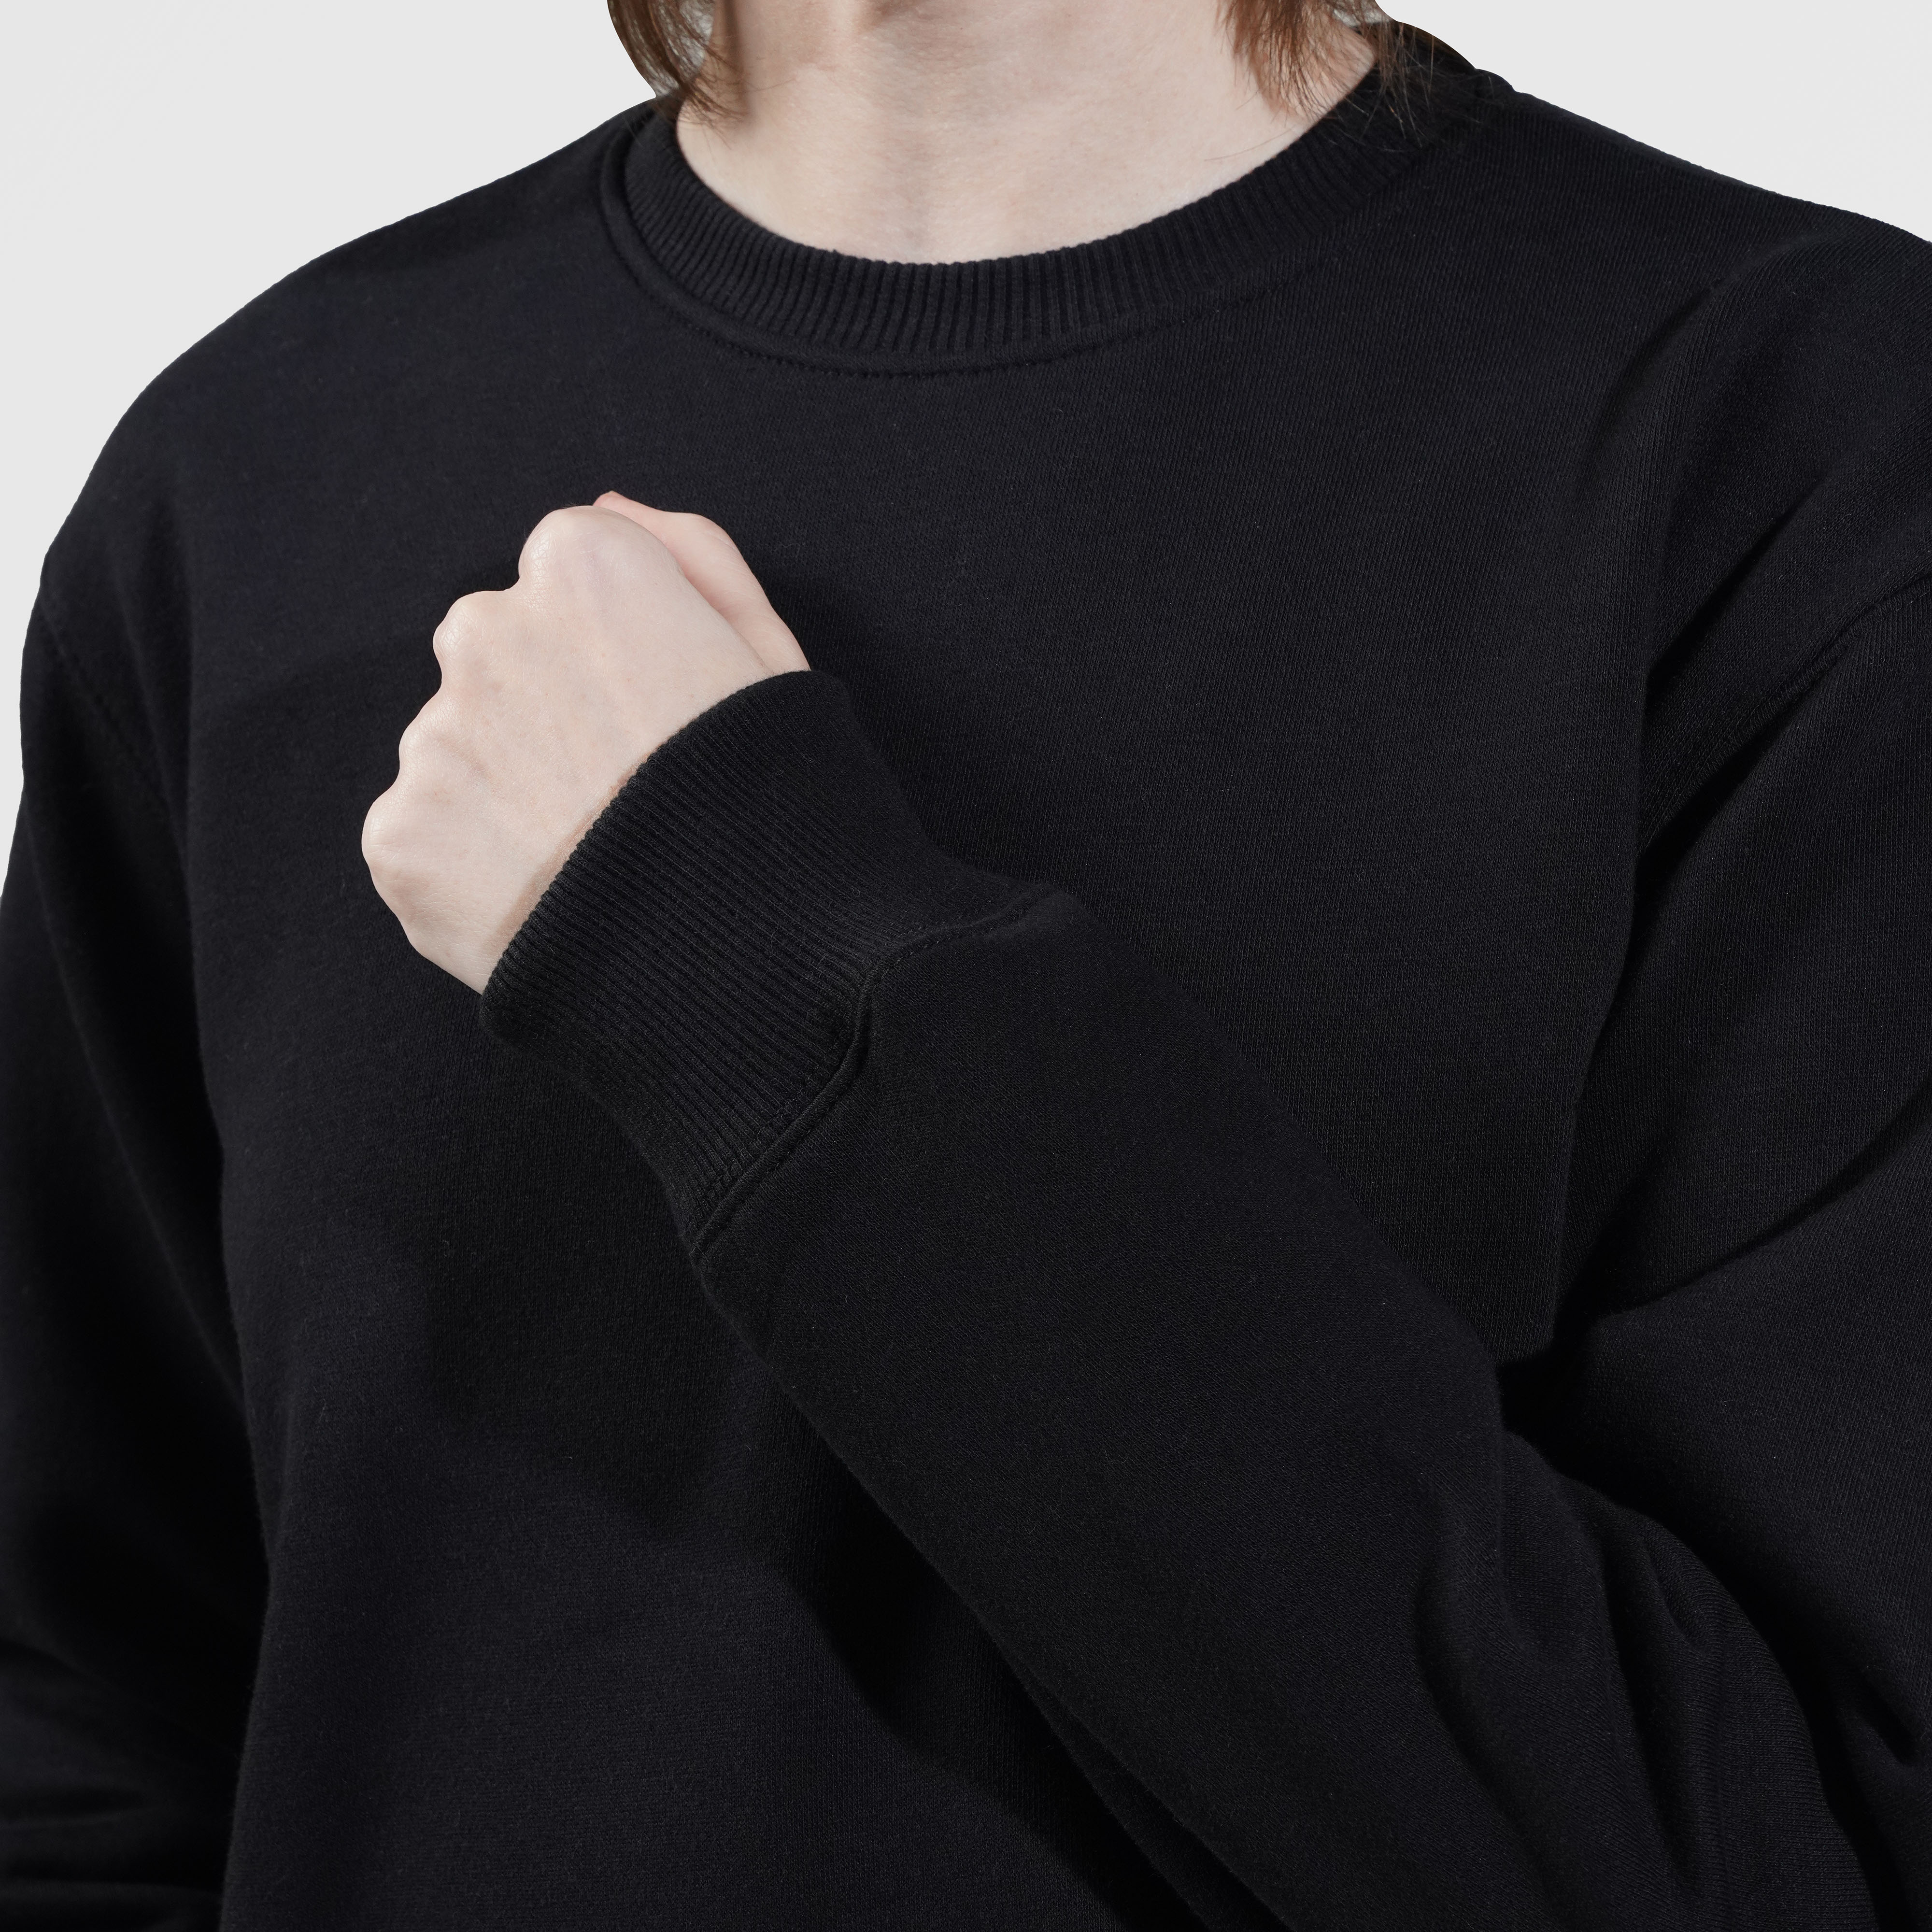 Argo Sweatshirt (Black)